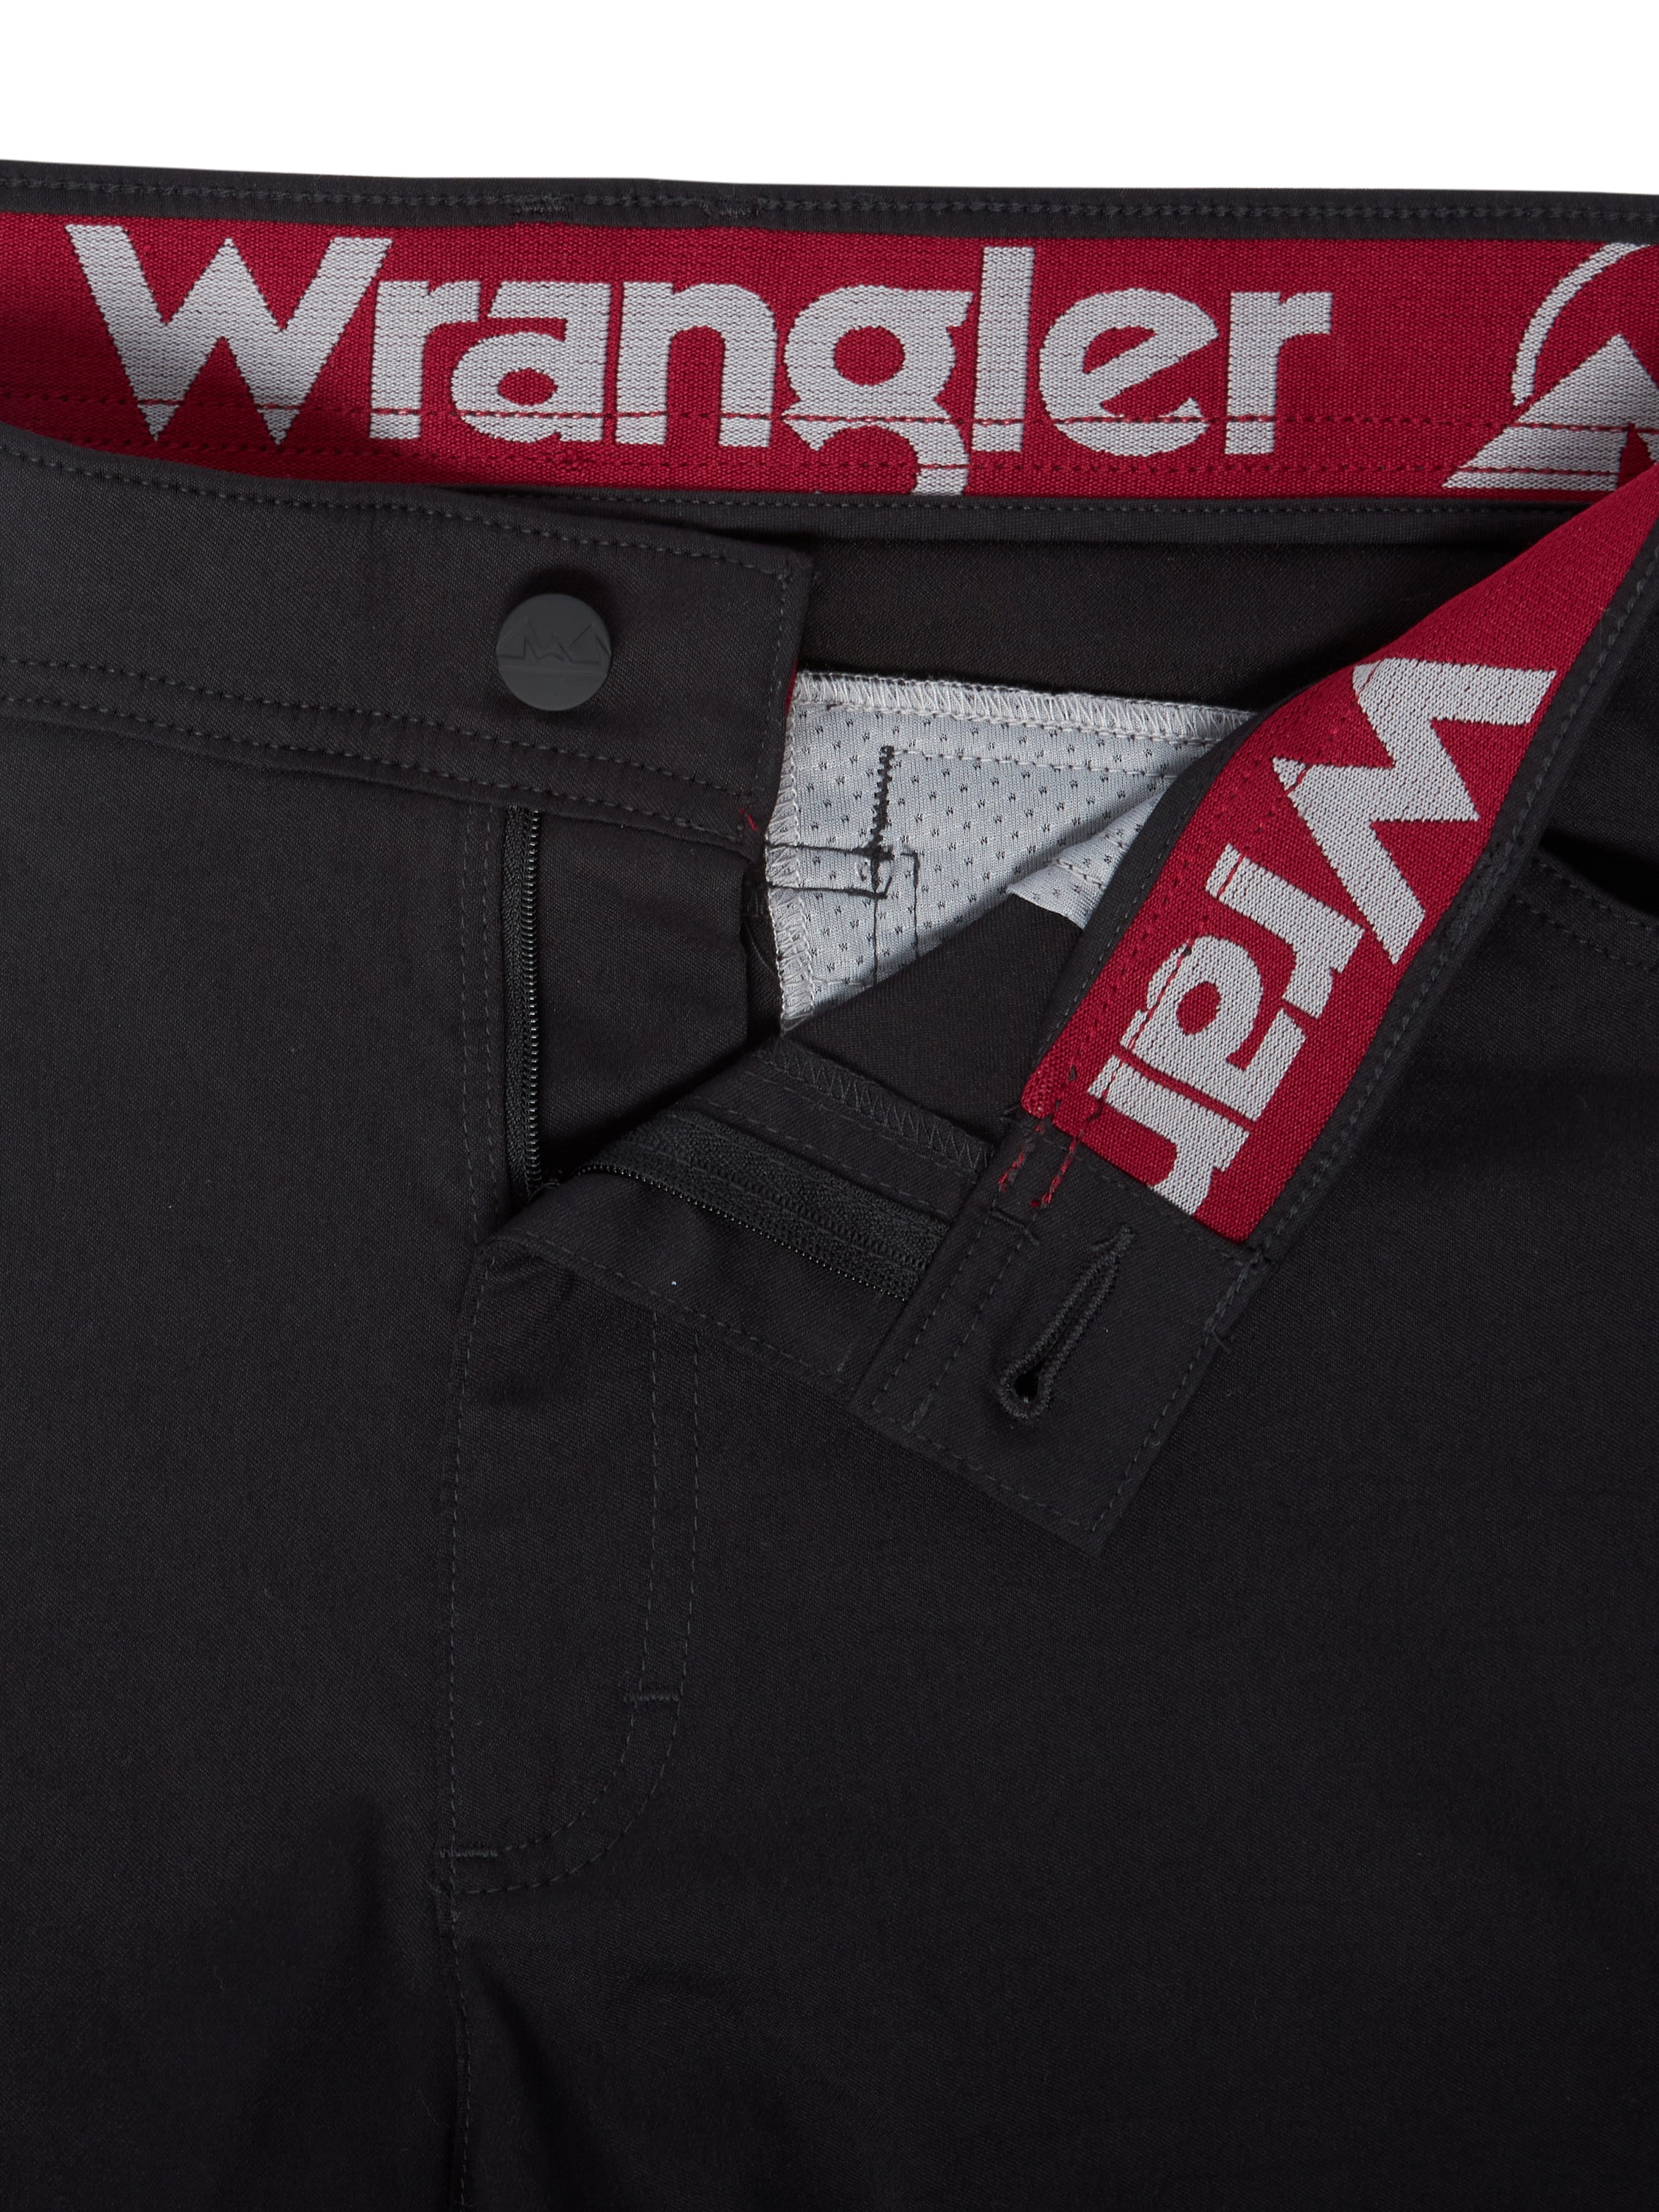 Wrangler Outdoor Series Hiking Pants Men's 30x30 Gray 95% Nylon 5% Spandex